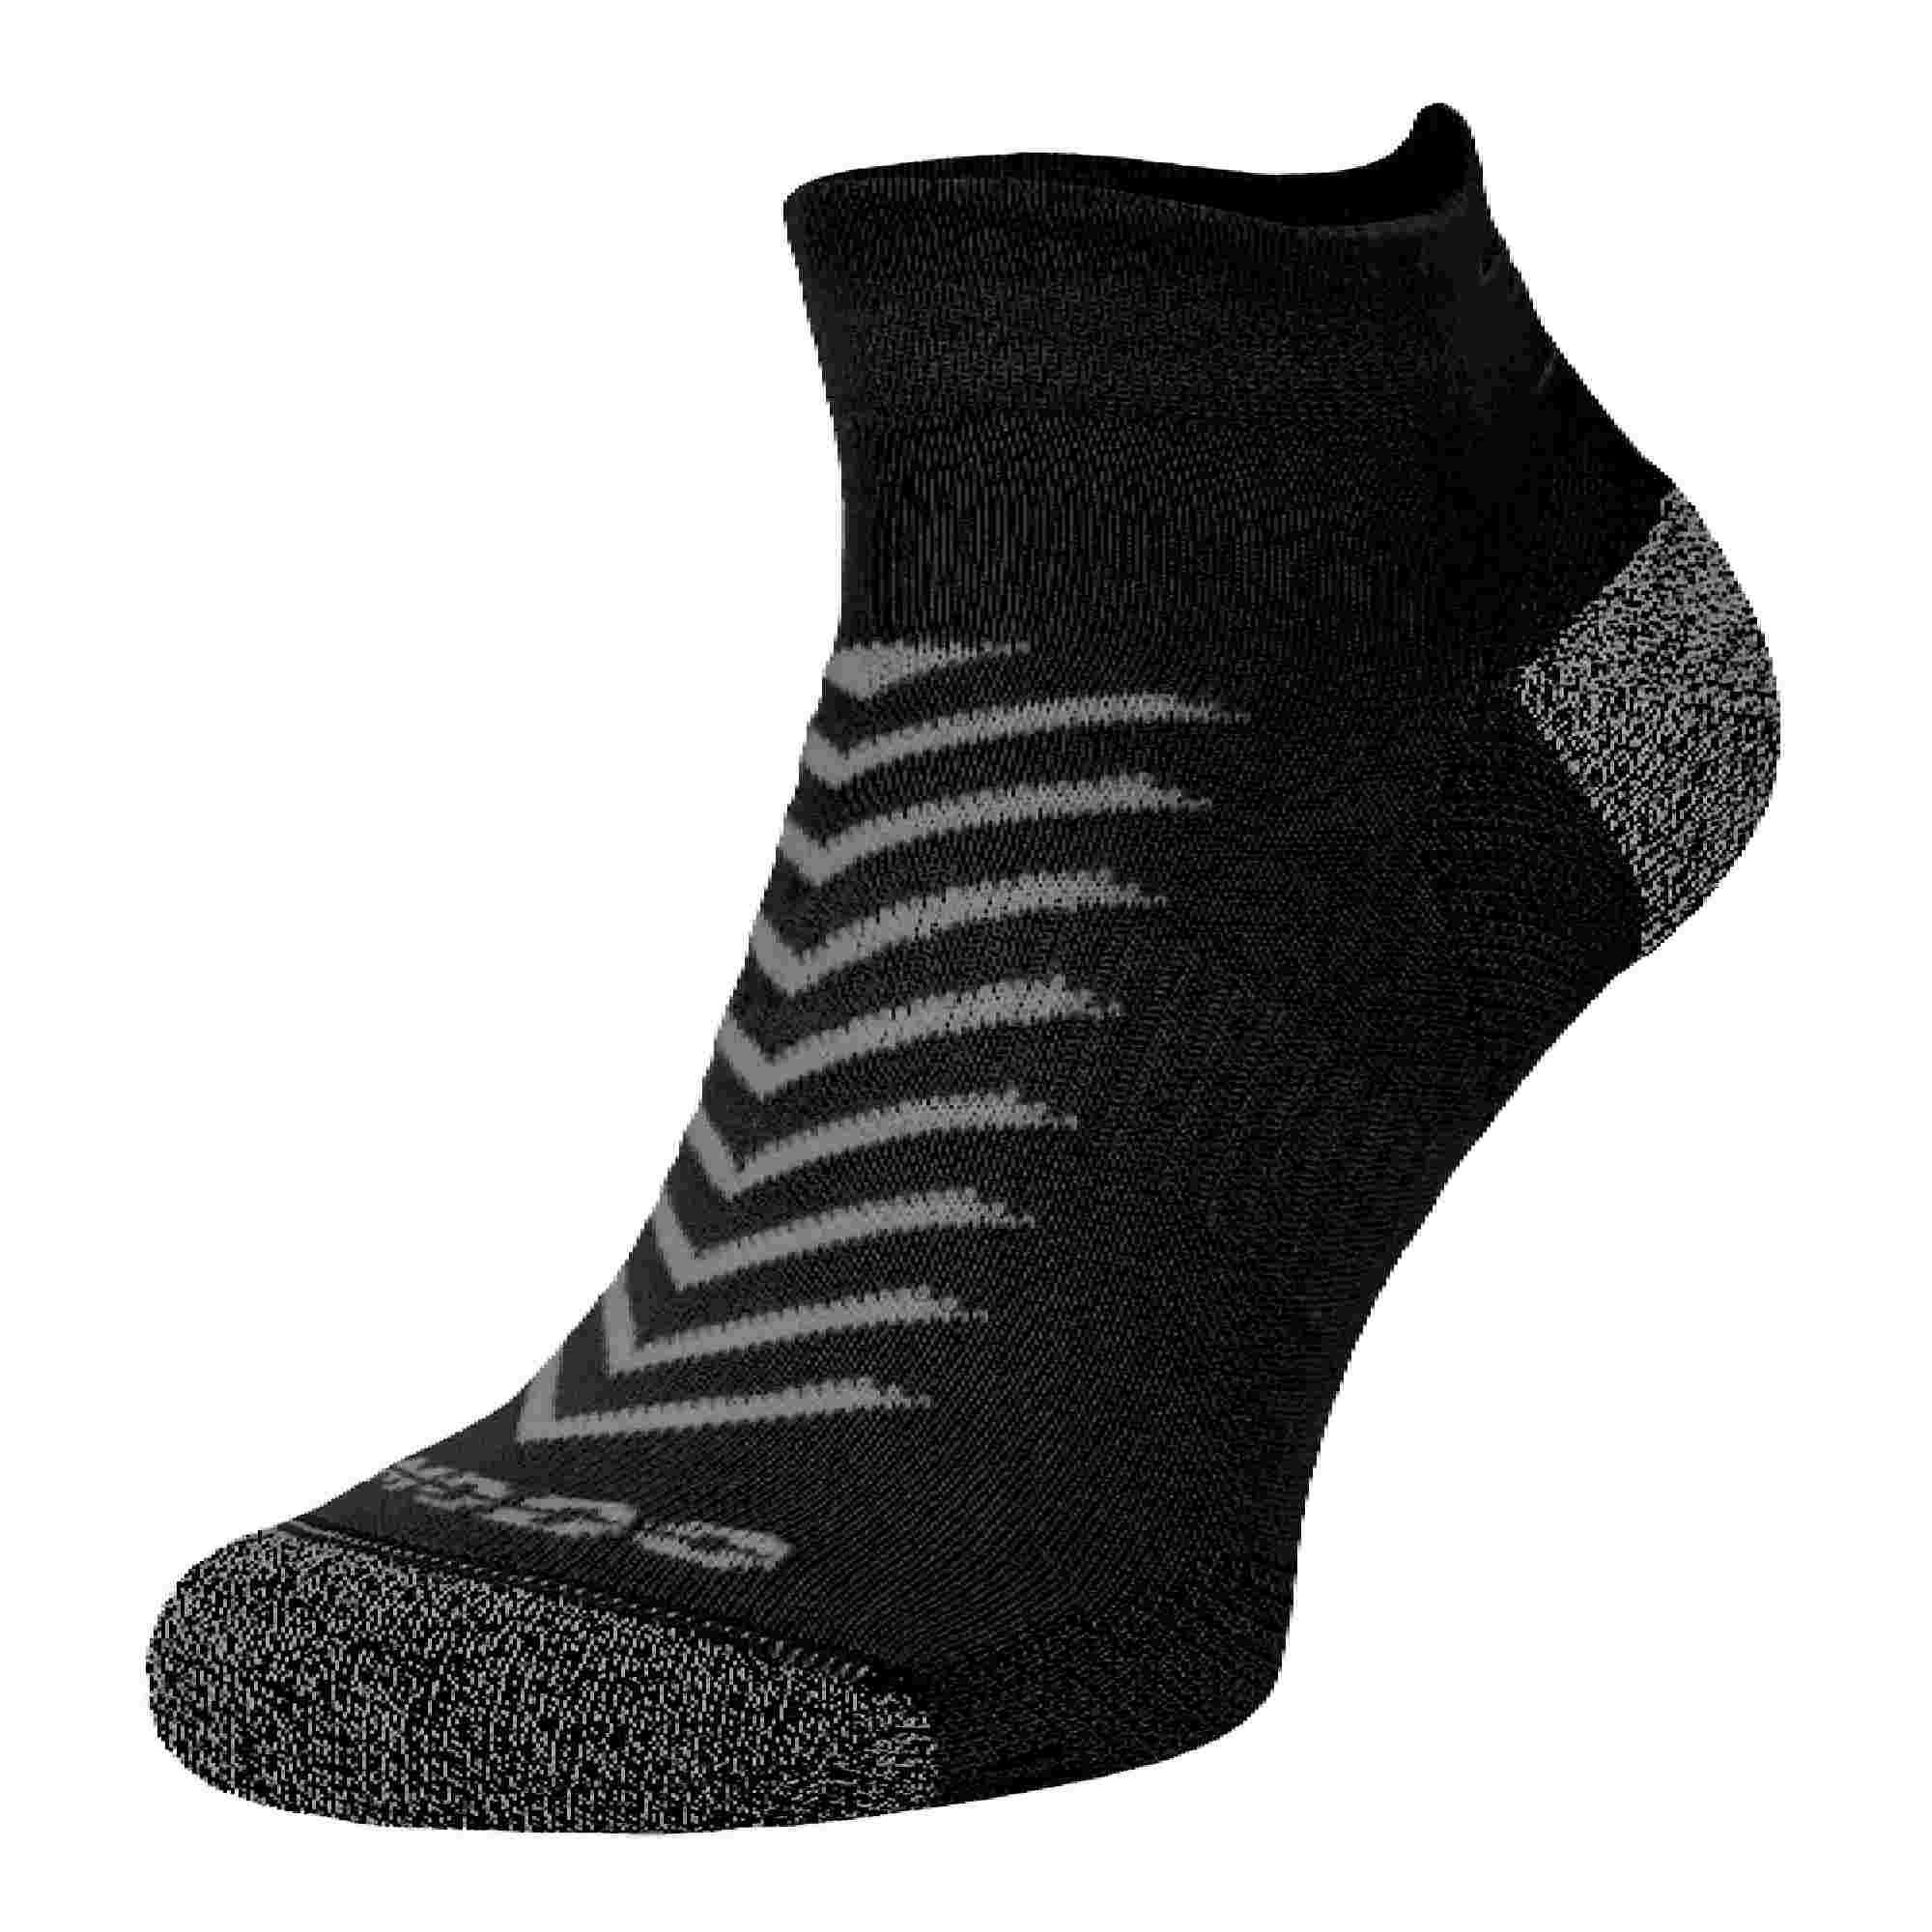 COMODO Hi Viz Running Socks for Summer | Reflective Coolmax Socks